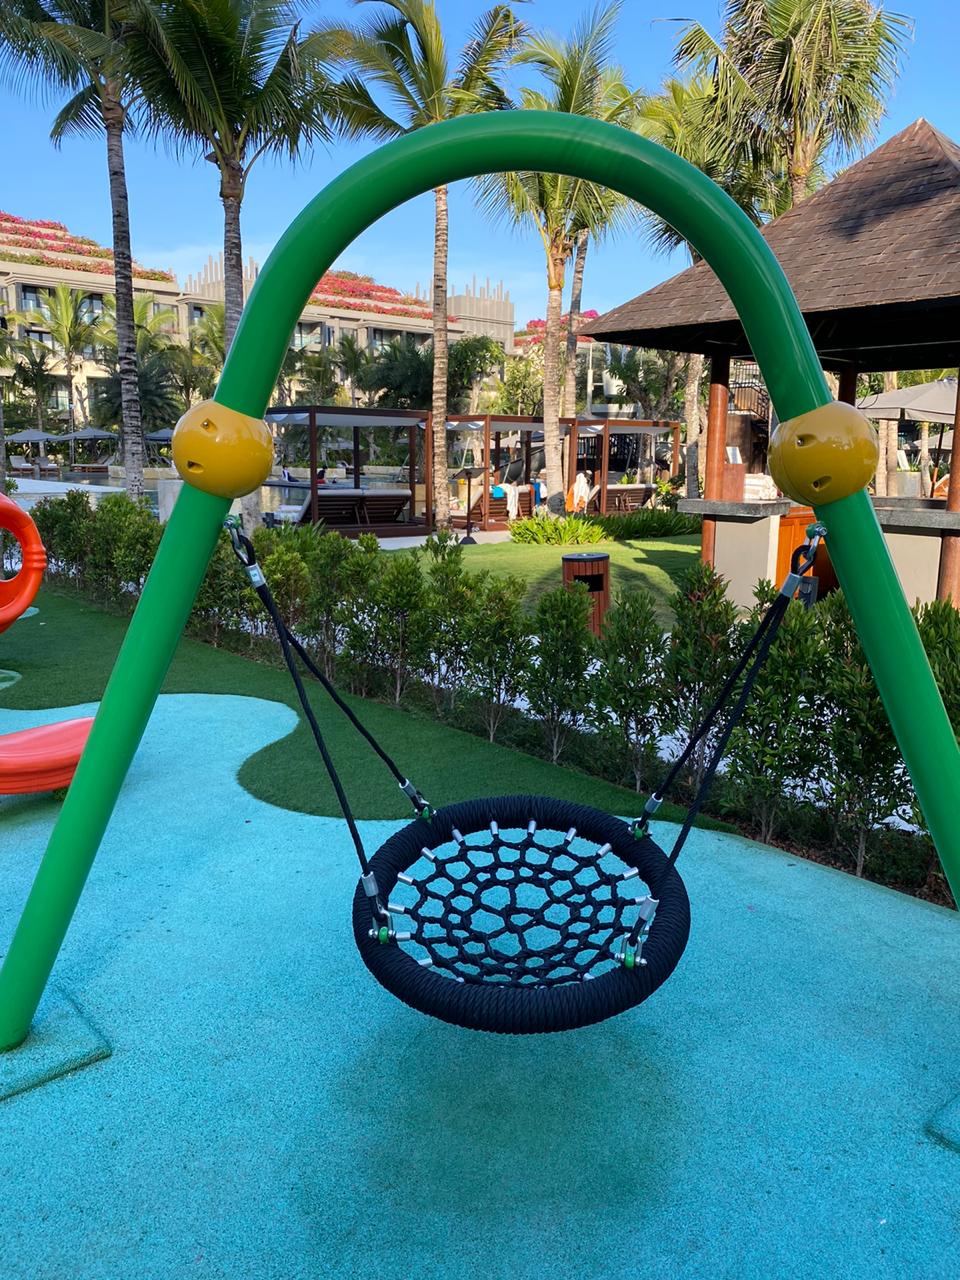 Project Outdoor Playground - Hotel Kempinski, Bali